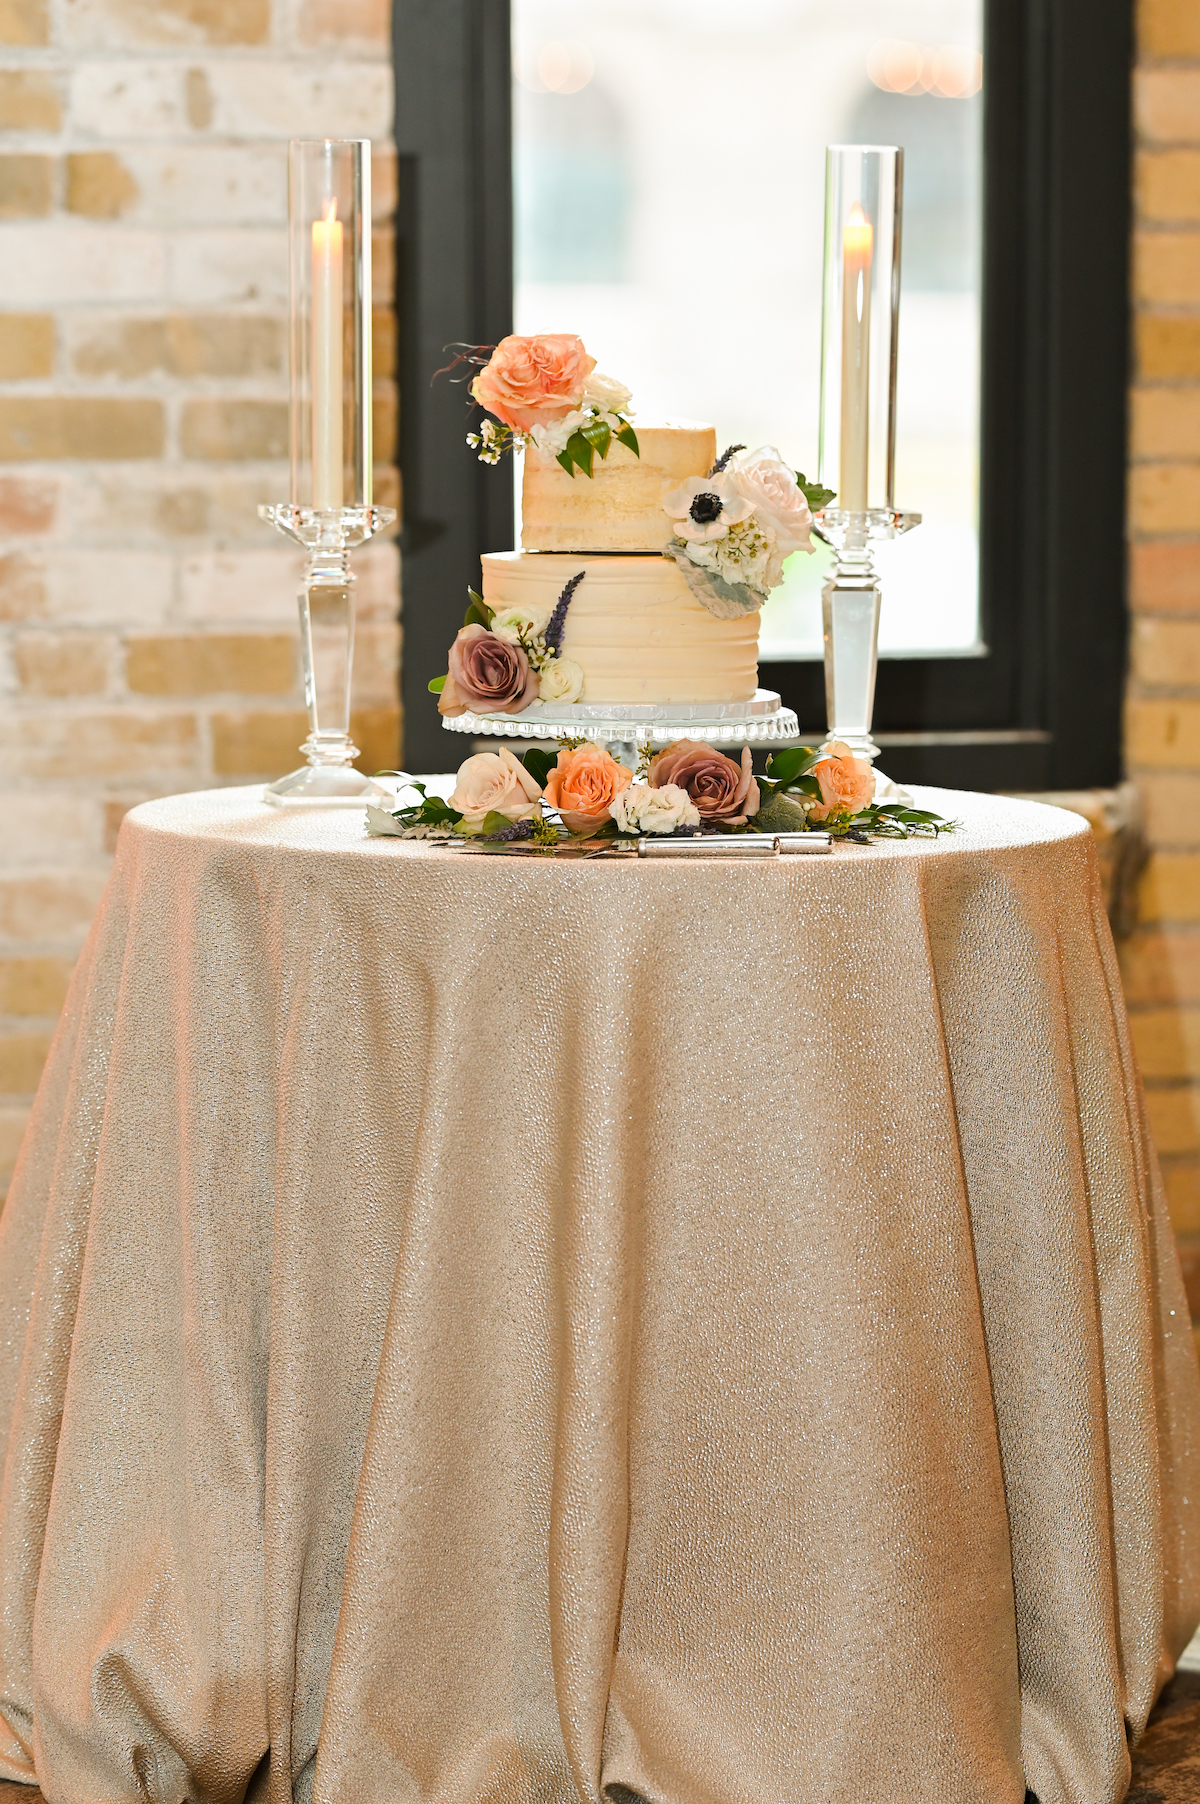 2-tier floral white wedding cake